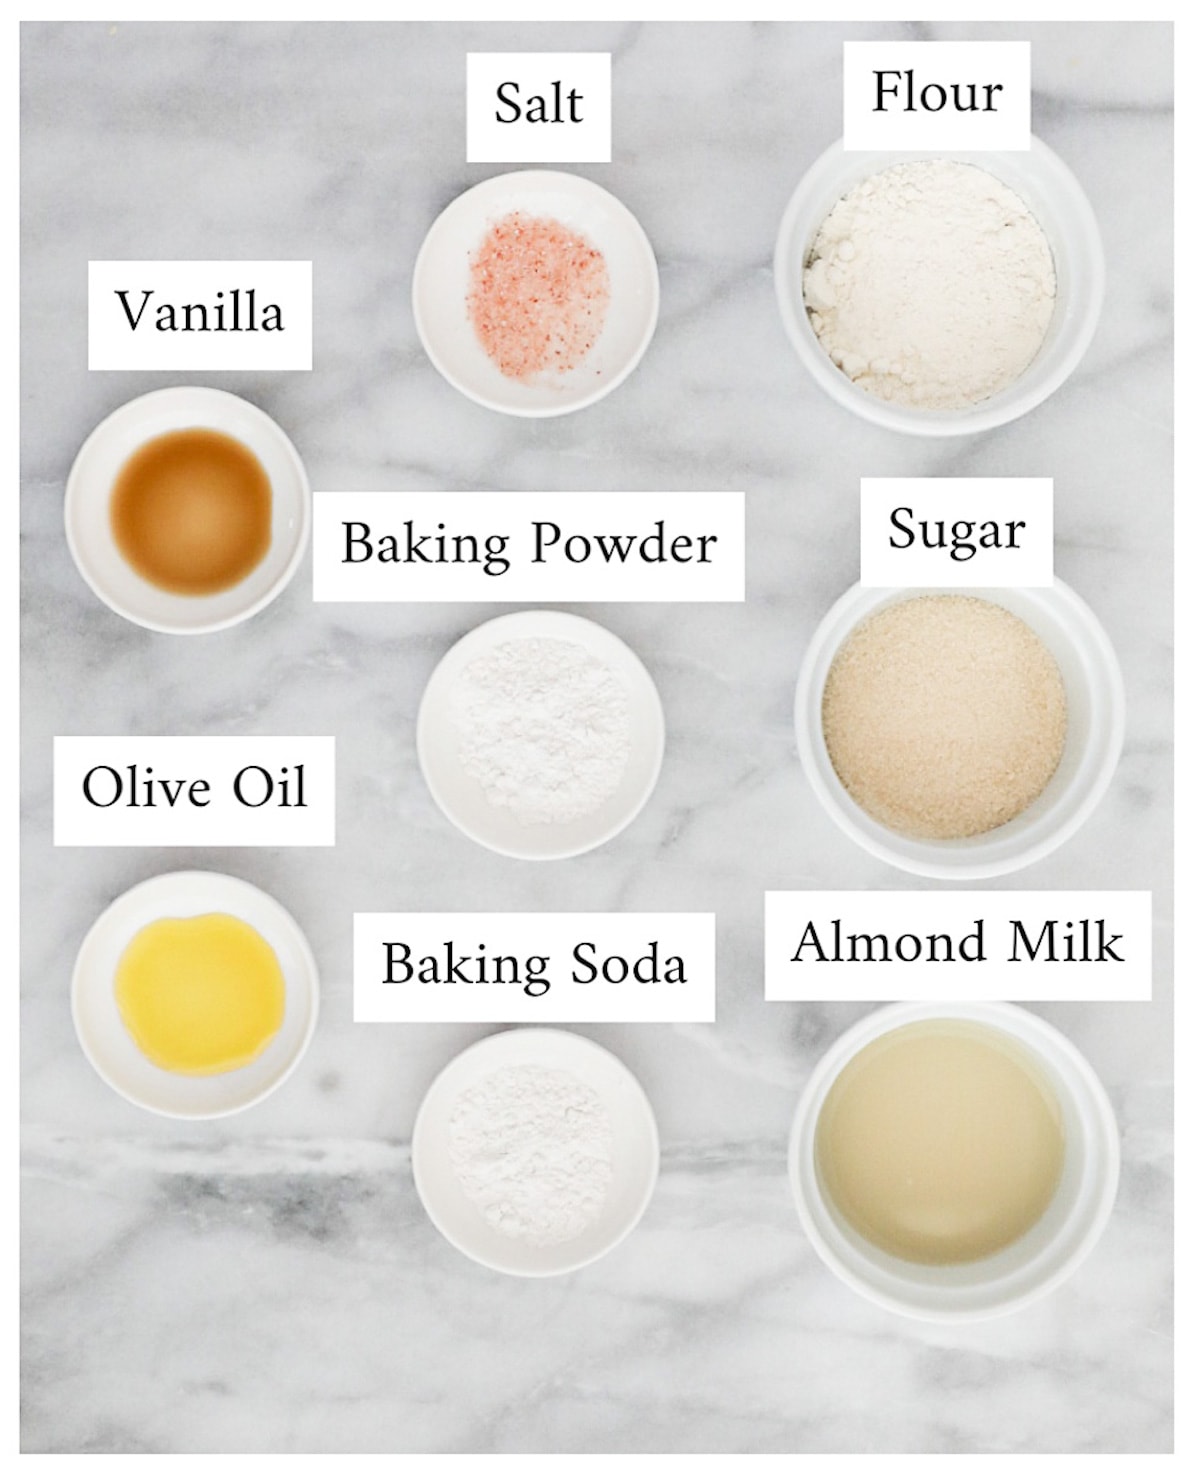 Labeled ingredients including: salt, flour, vanilla, baking powder, sugar, olive oil, baking soda, baking powder